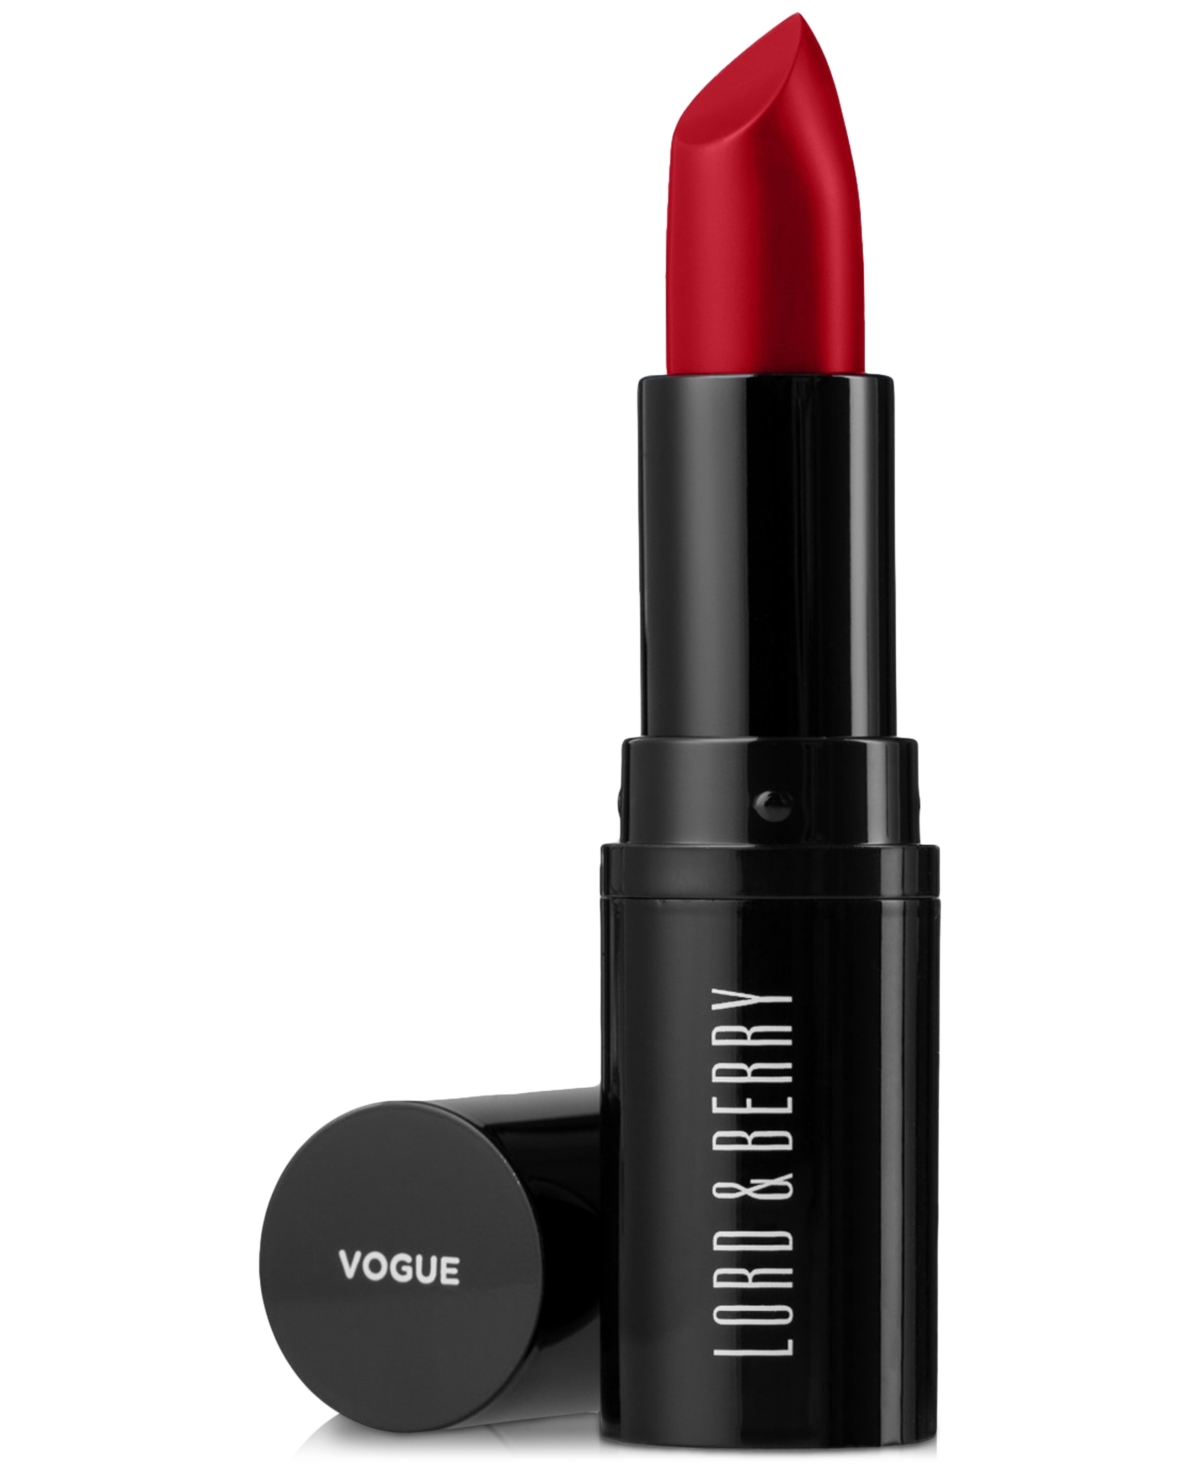 Lord & Berry Vogue Matte Lipstick In White